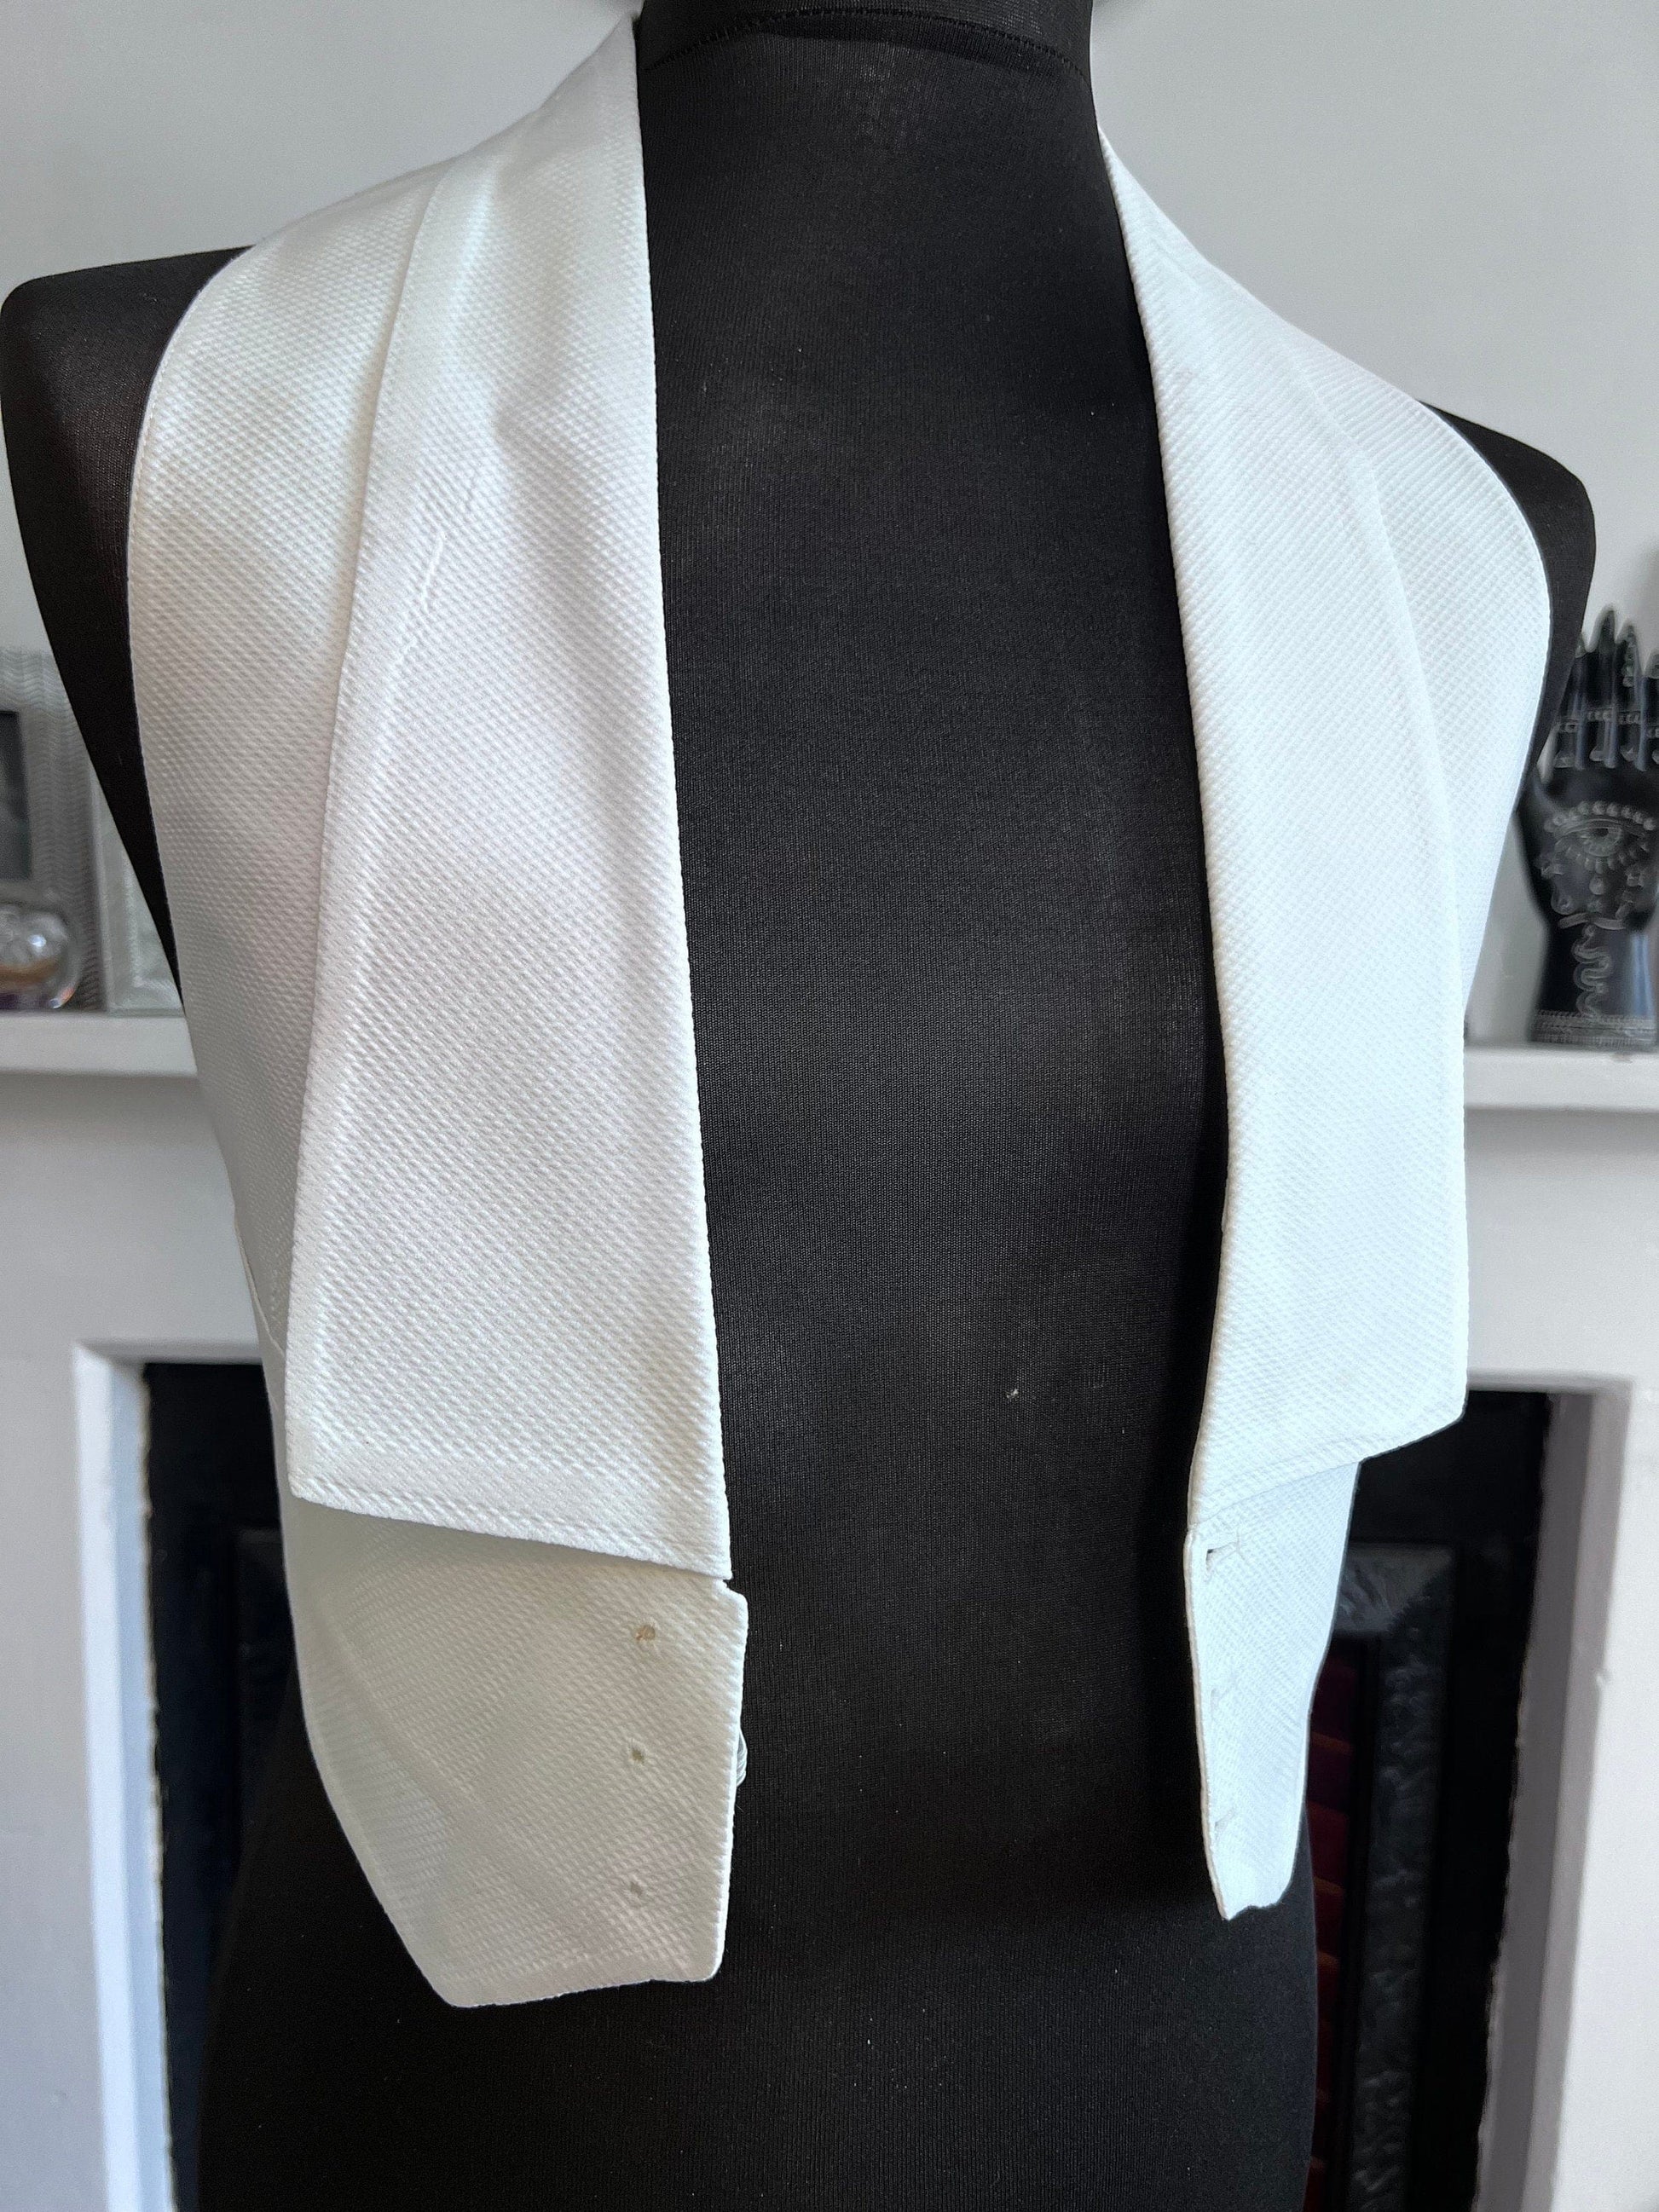 Vintage Mens White Tuxedo Waistcoat White , Suit Vest White Tie, Mens White Waffle Front Backless Tuxedo Suit Vest, AKCO elasticated back